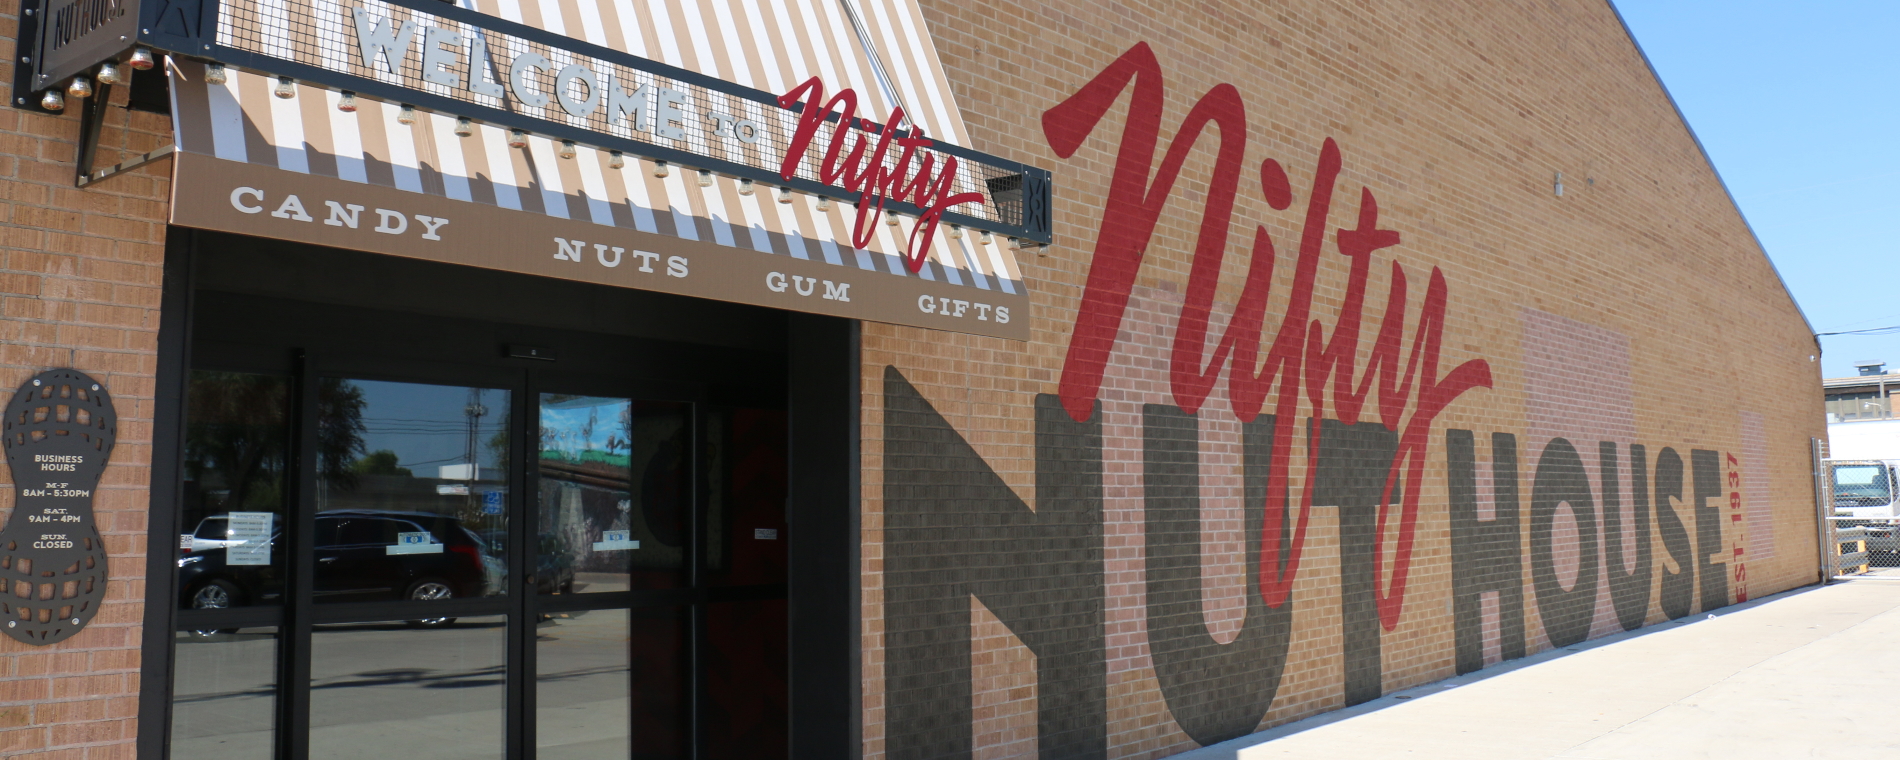 Nifty Nut House: Wichita's Version of Willy Wonka